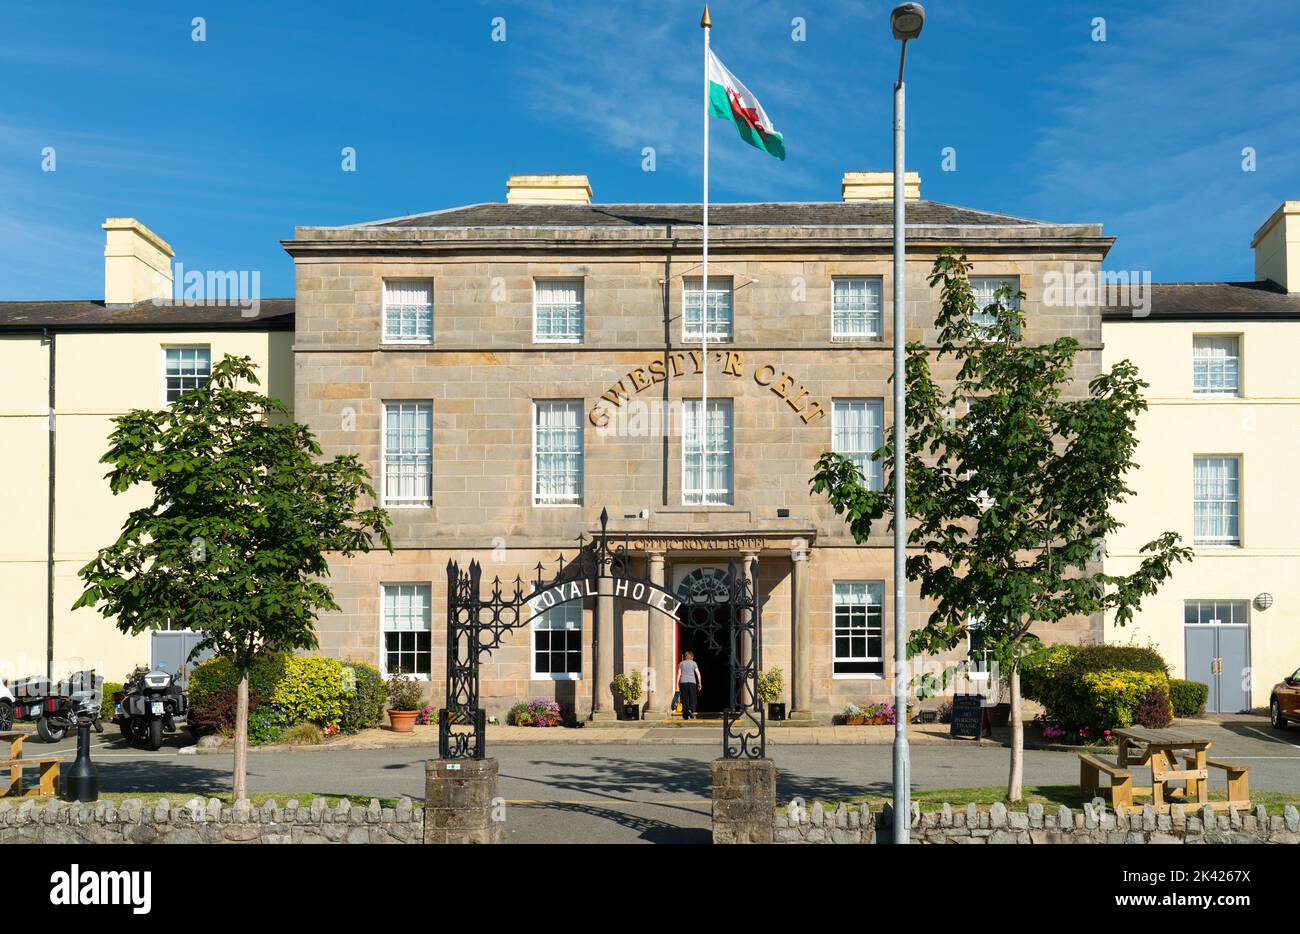 The Celtic Royal Hotel, Bangor Street, Caernarfon, North Wales. Image taken in July 2022. Stock Photo